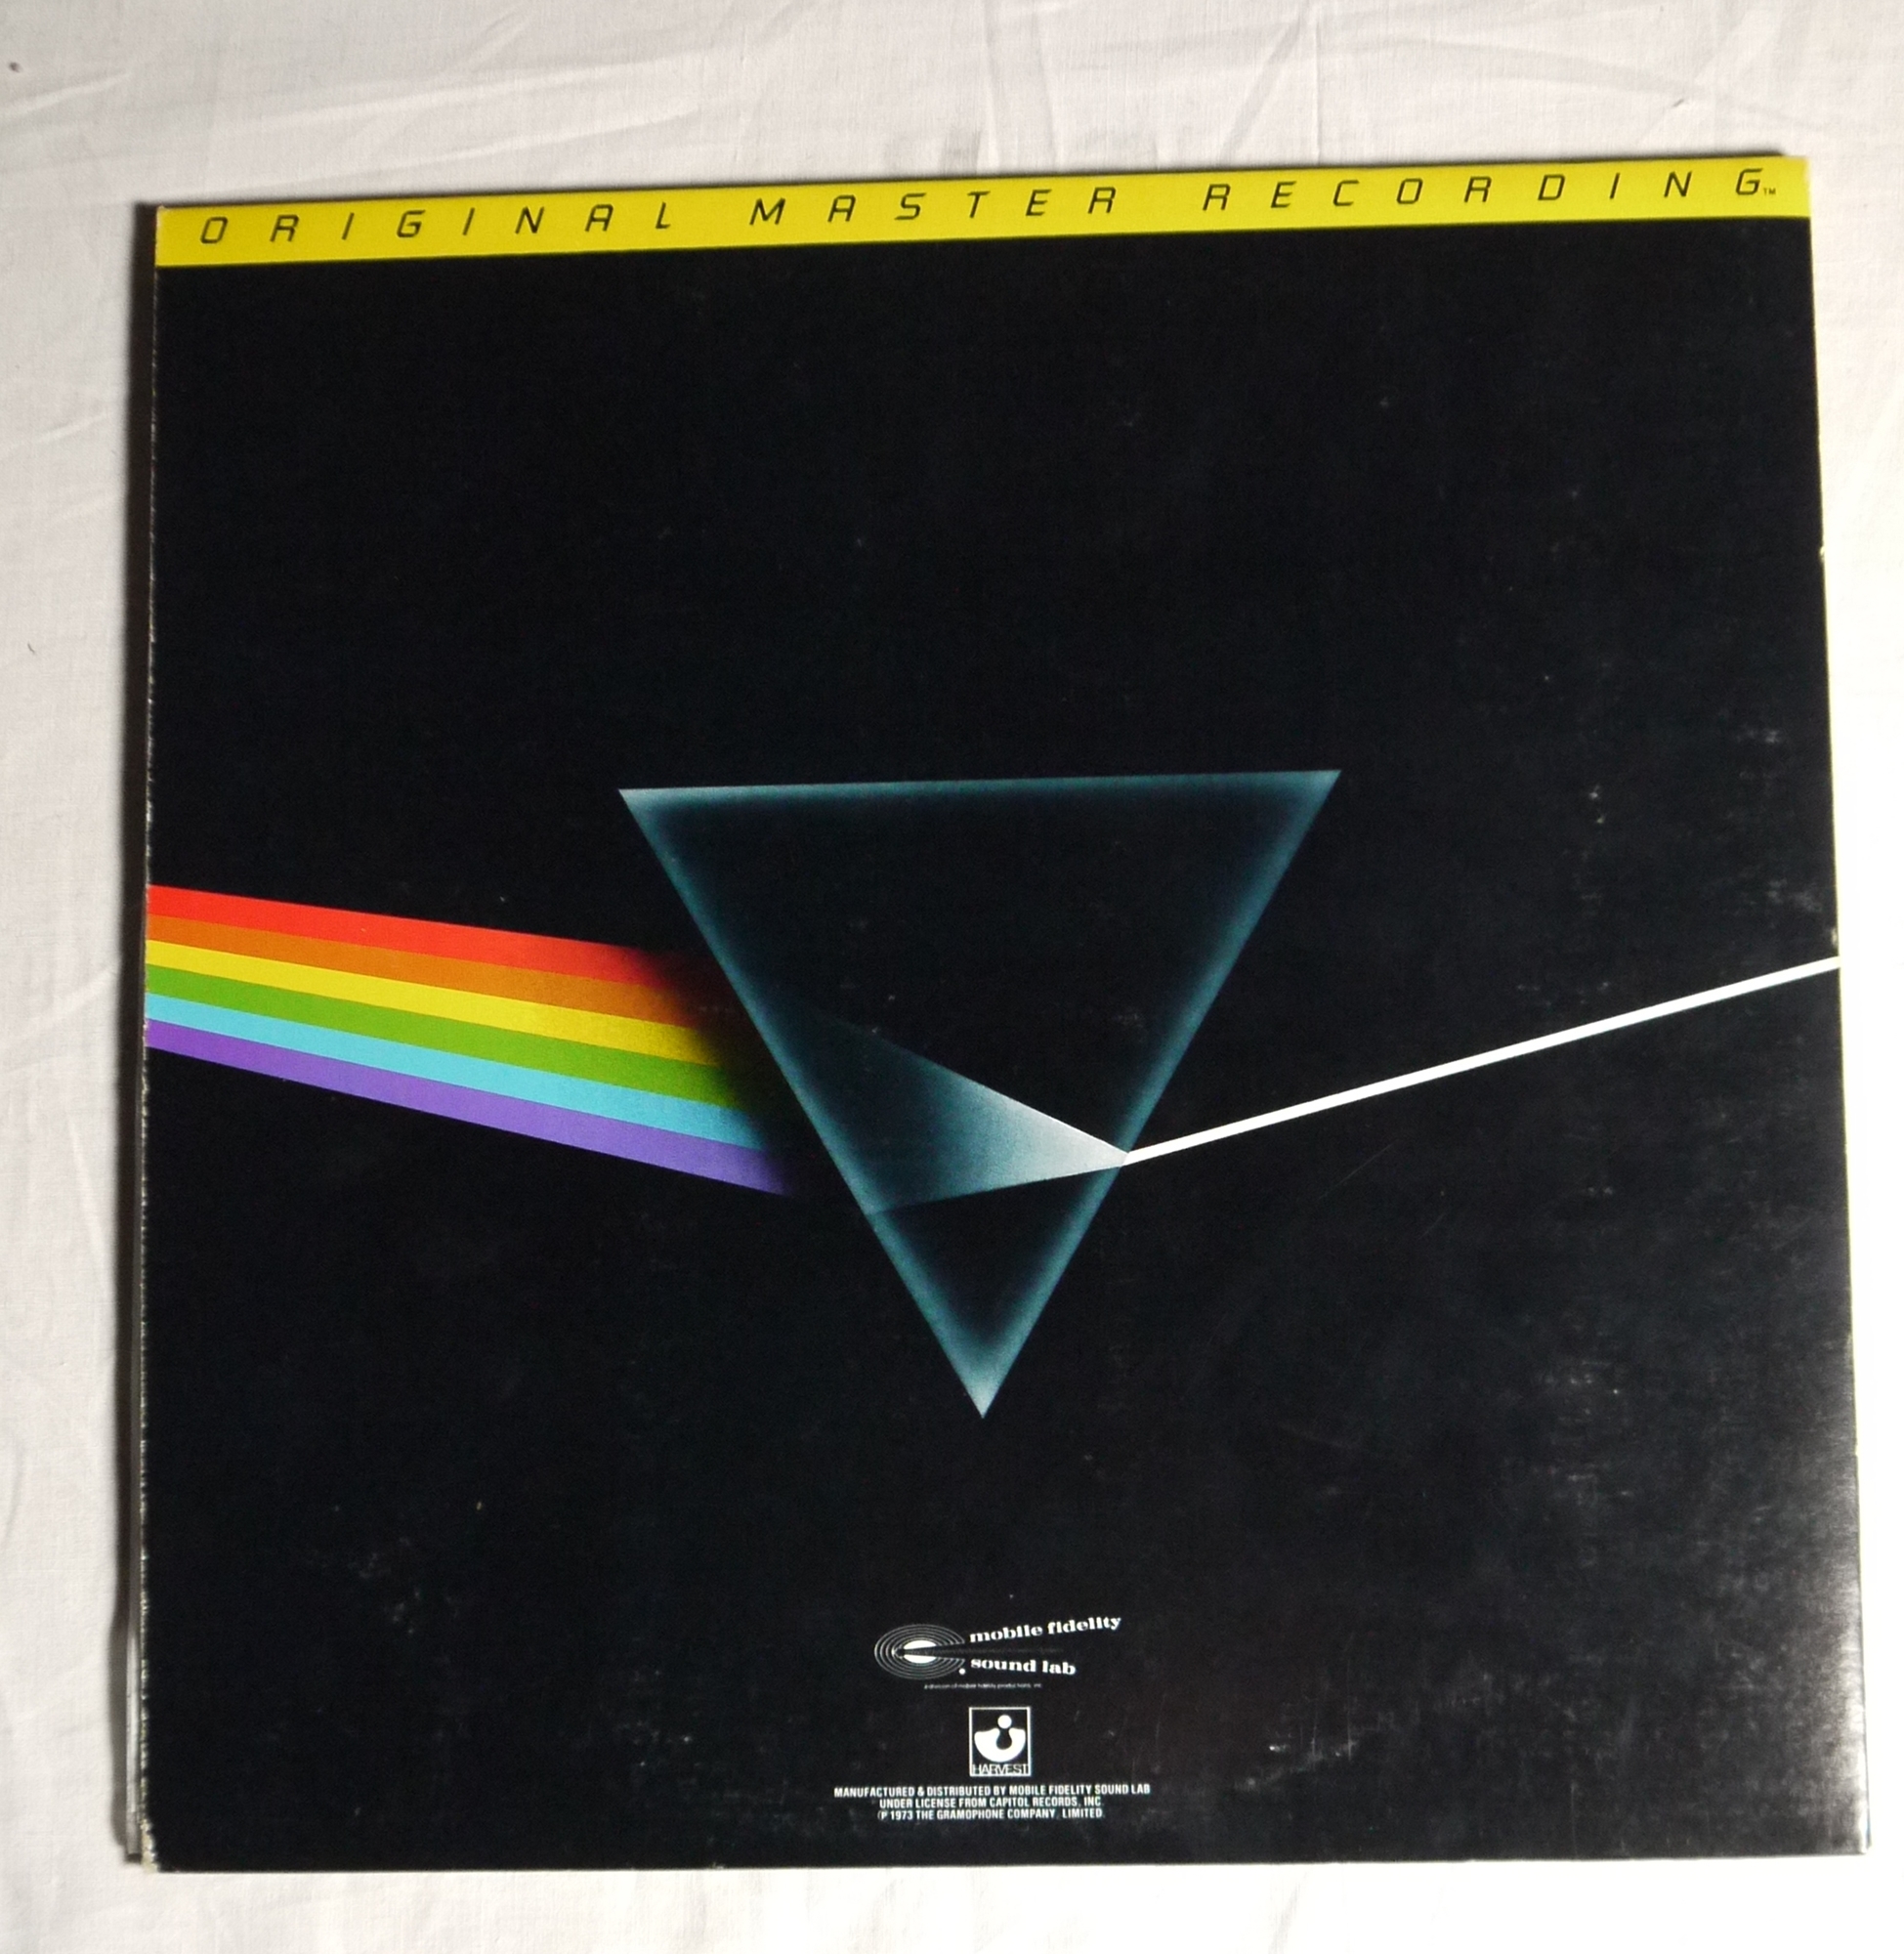 Pink Floyd 'Dark Side of the Moon', original master recording MFSL 1-017, gatefold with original - Image 3 of 4